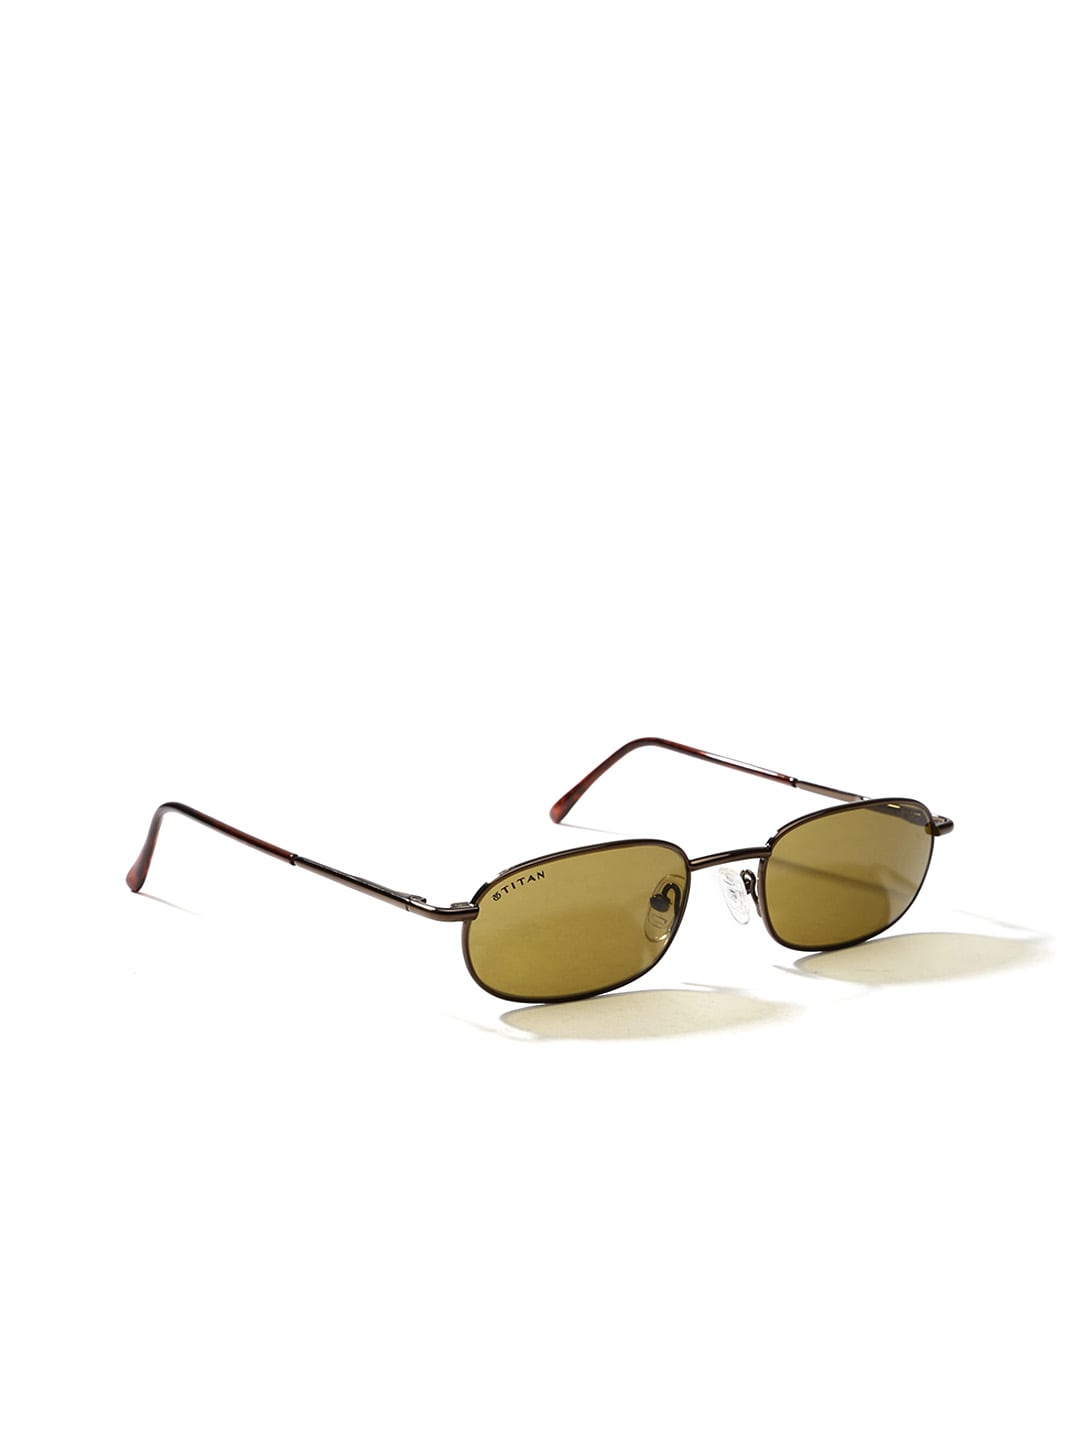 Fastrack Unisex Rectangular Sunglasses FTML005GLBR2